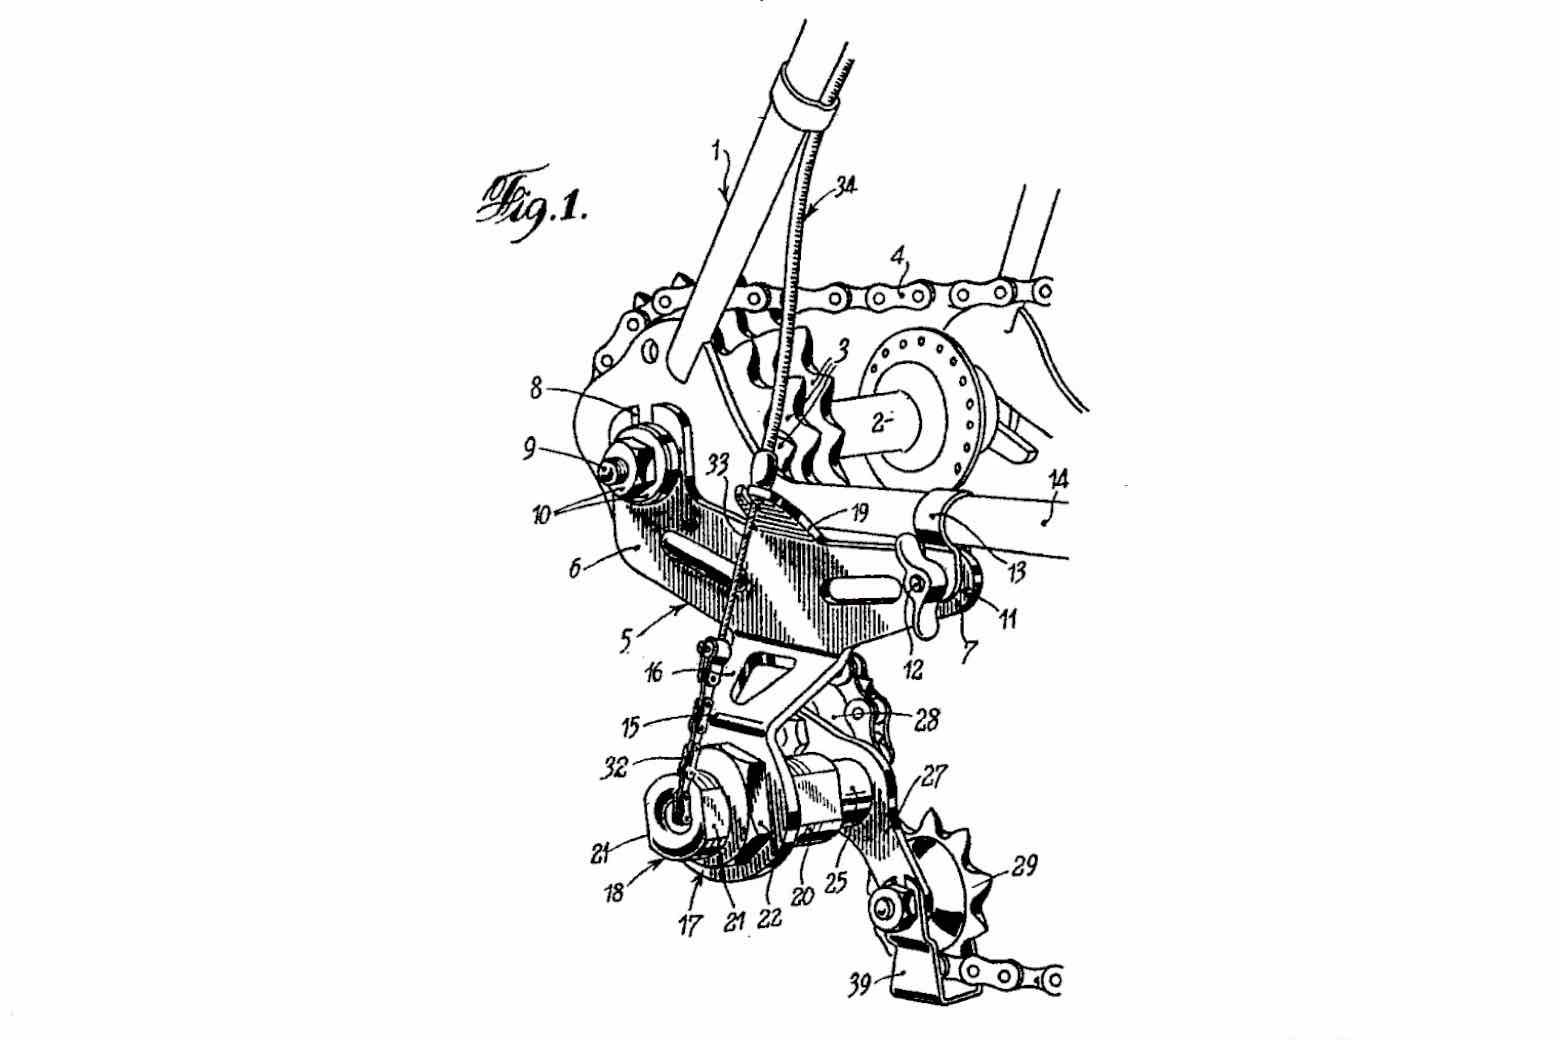 UK Patent 508,947 - Cyclo Star main image